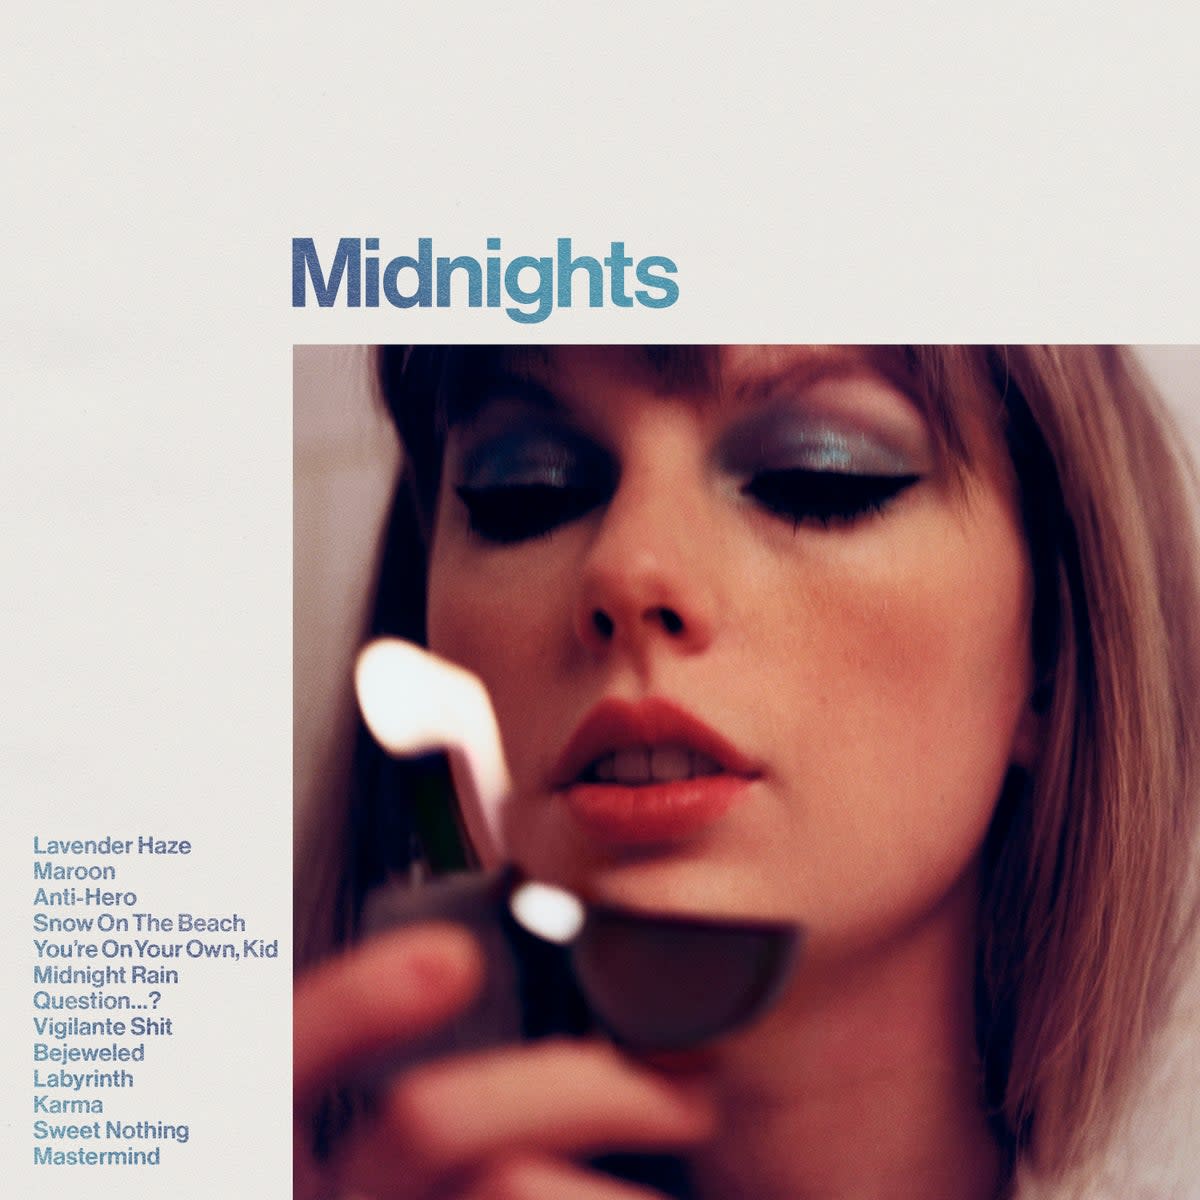 Artwork for Taylor Swift’s album ‘Midnights’ (AP)